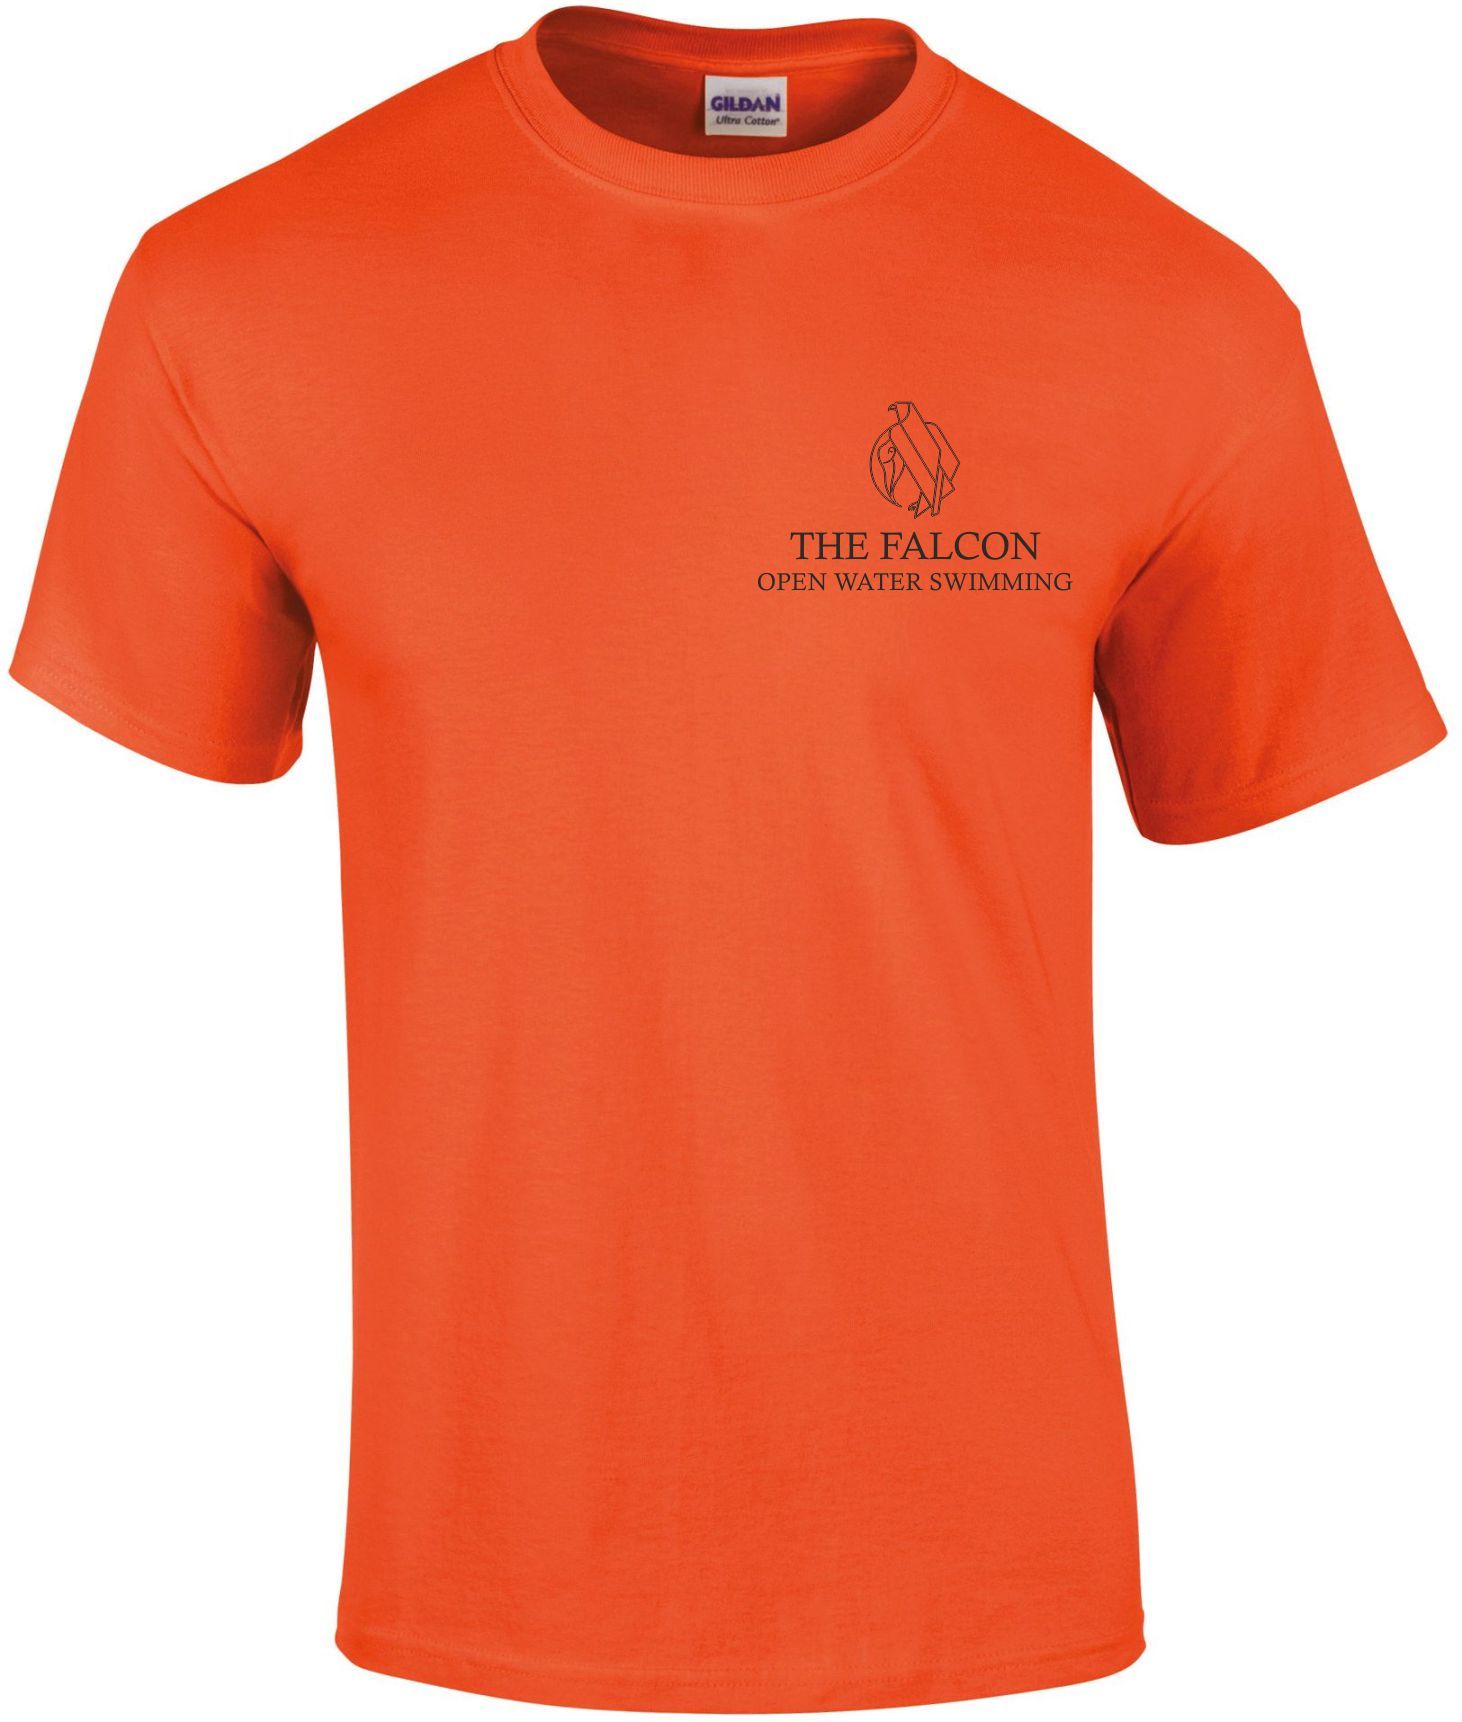 The Falcon Open Water Swimming - Standard Orange Falcon T-Shirt (Unisex)